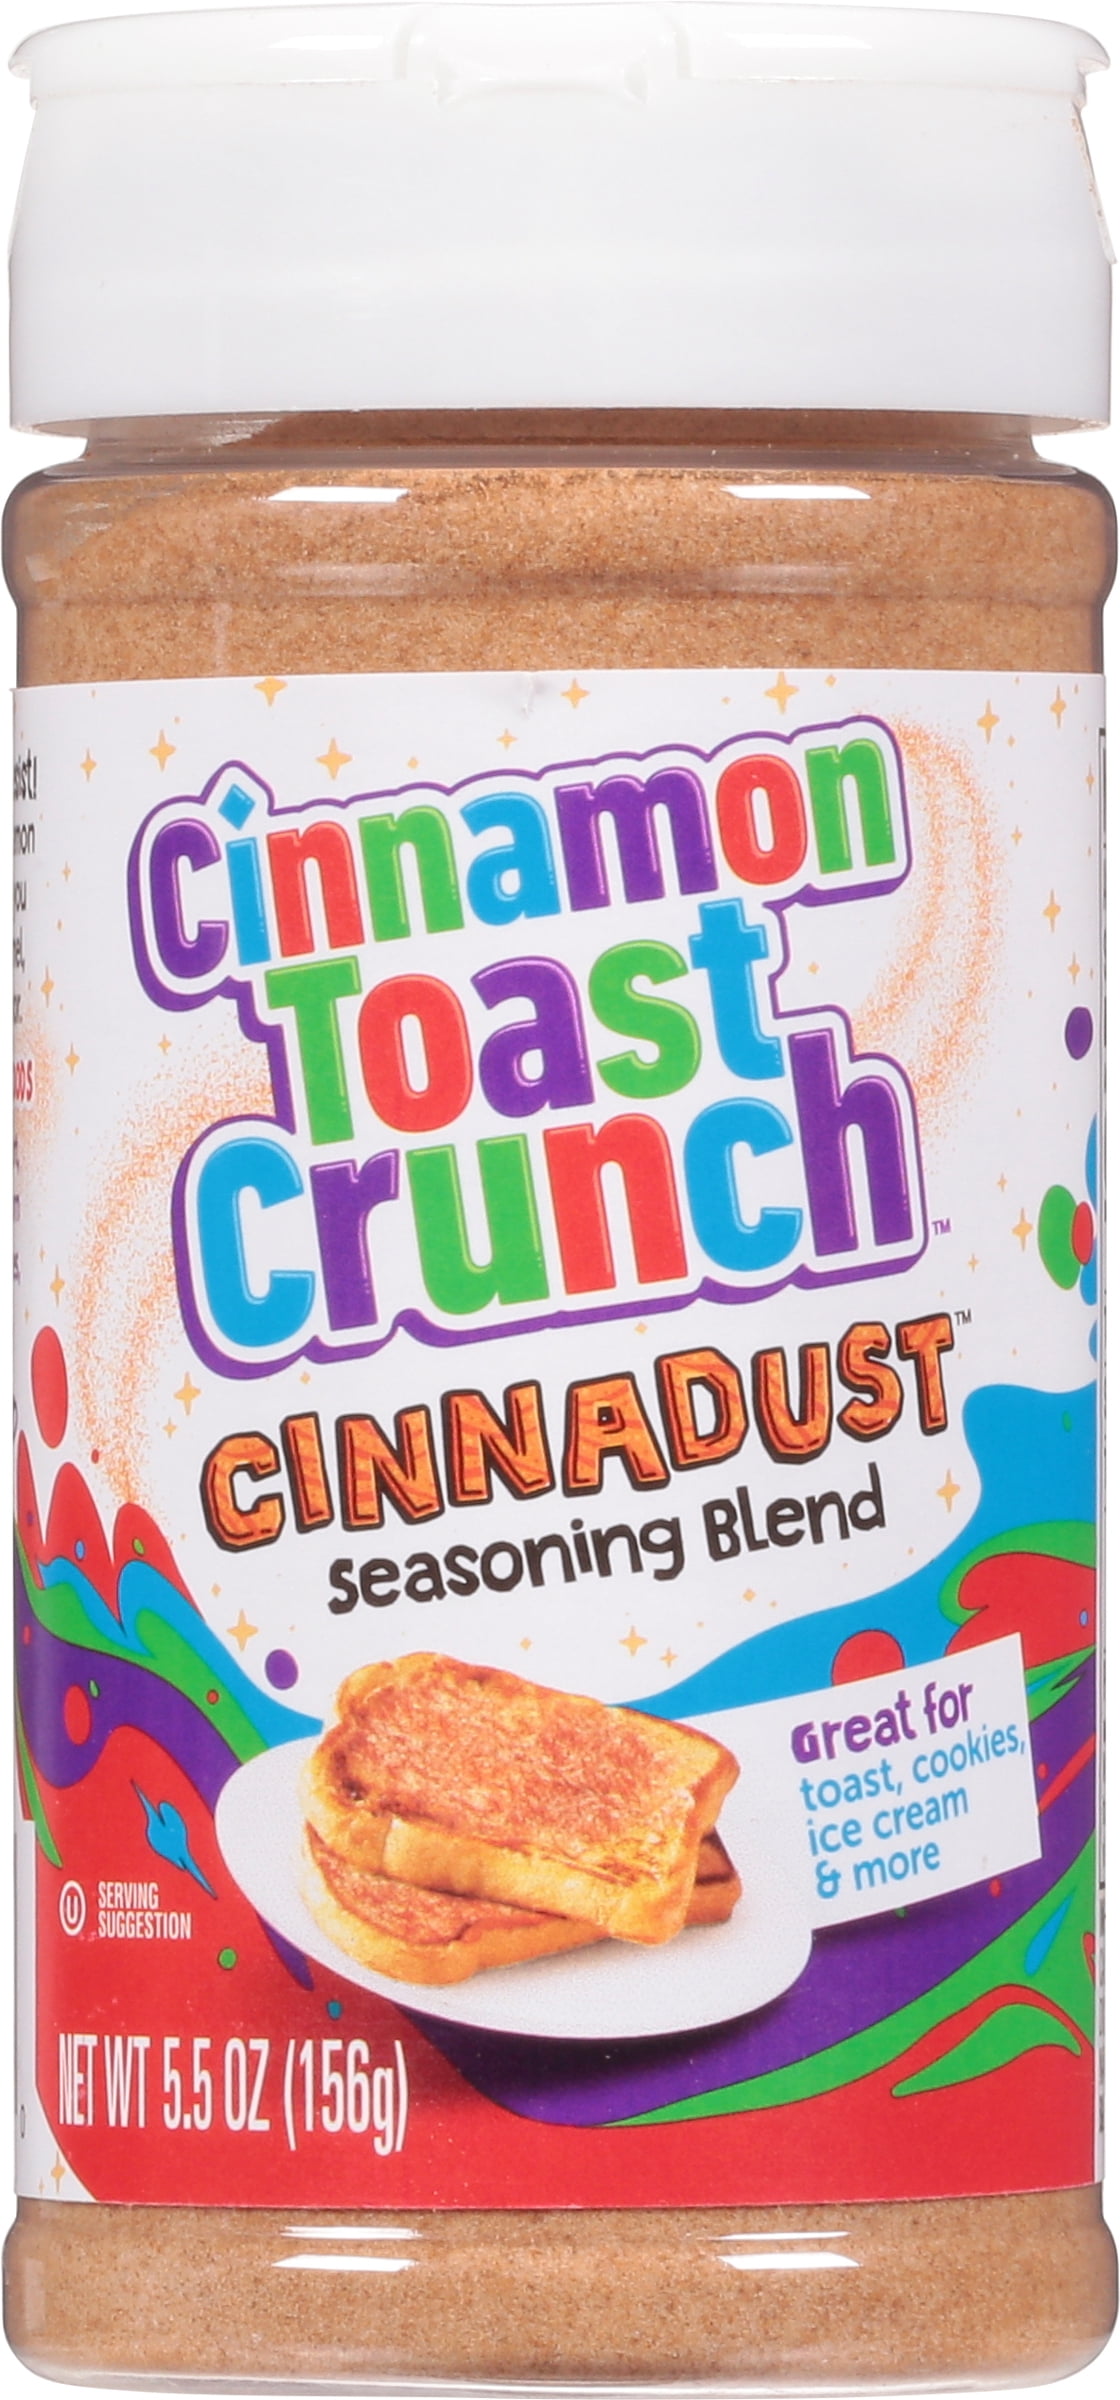  Cinnamon Toast Crunch Cinnadust Seasoning, 3.5 Ounce